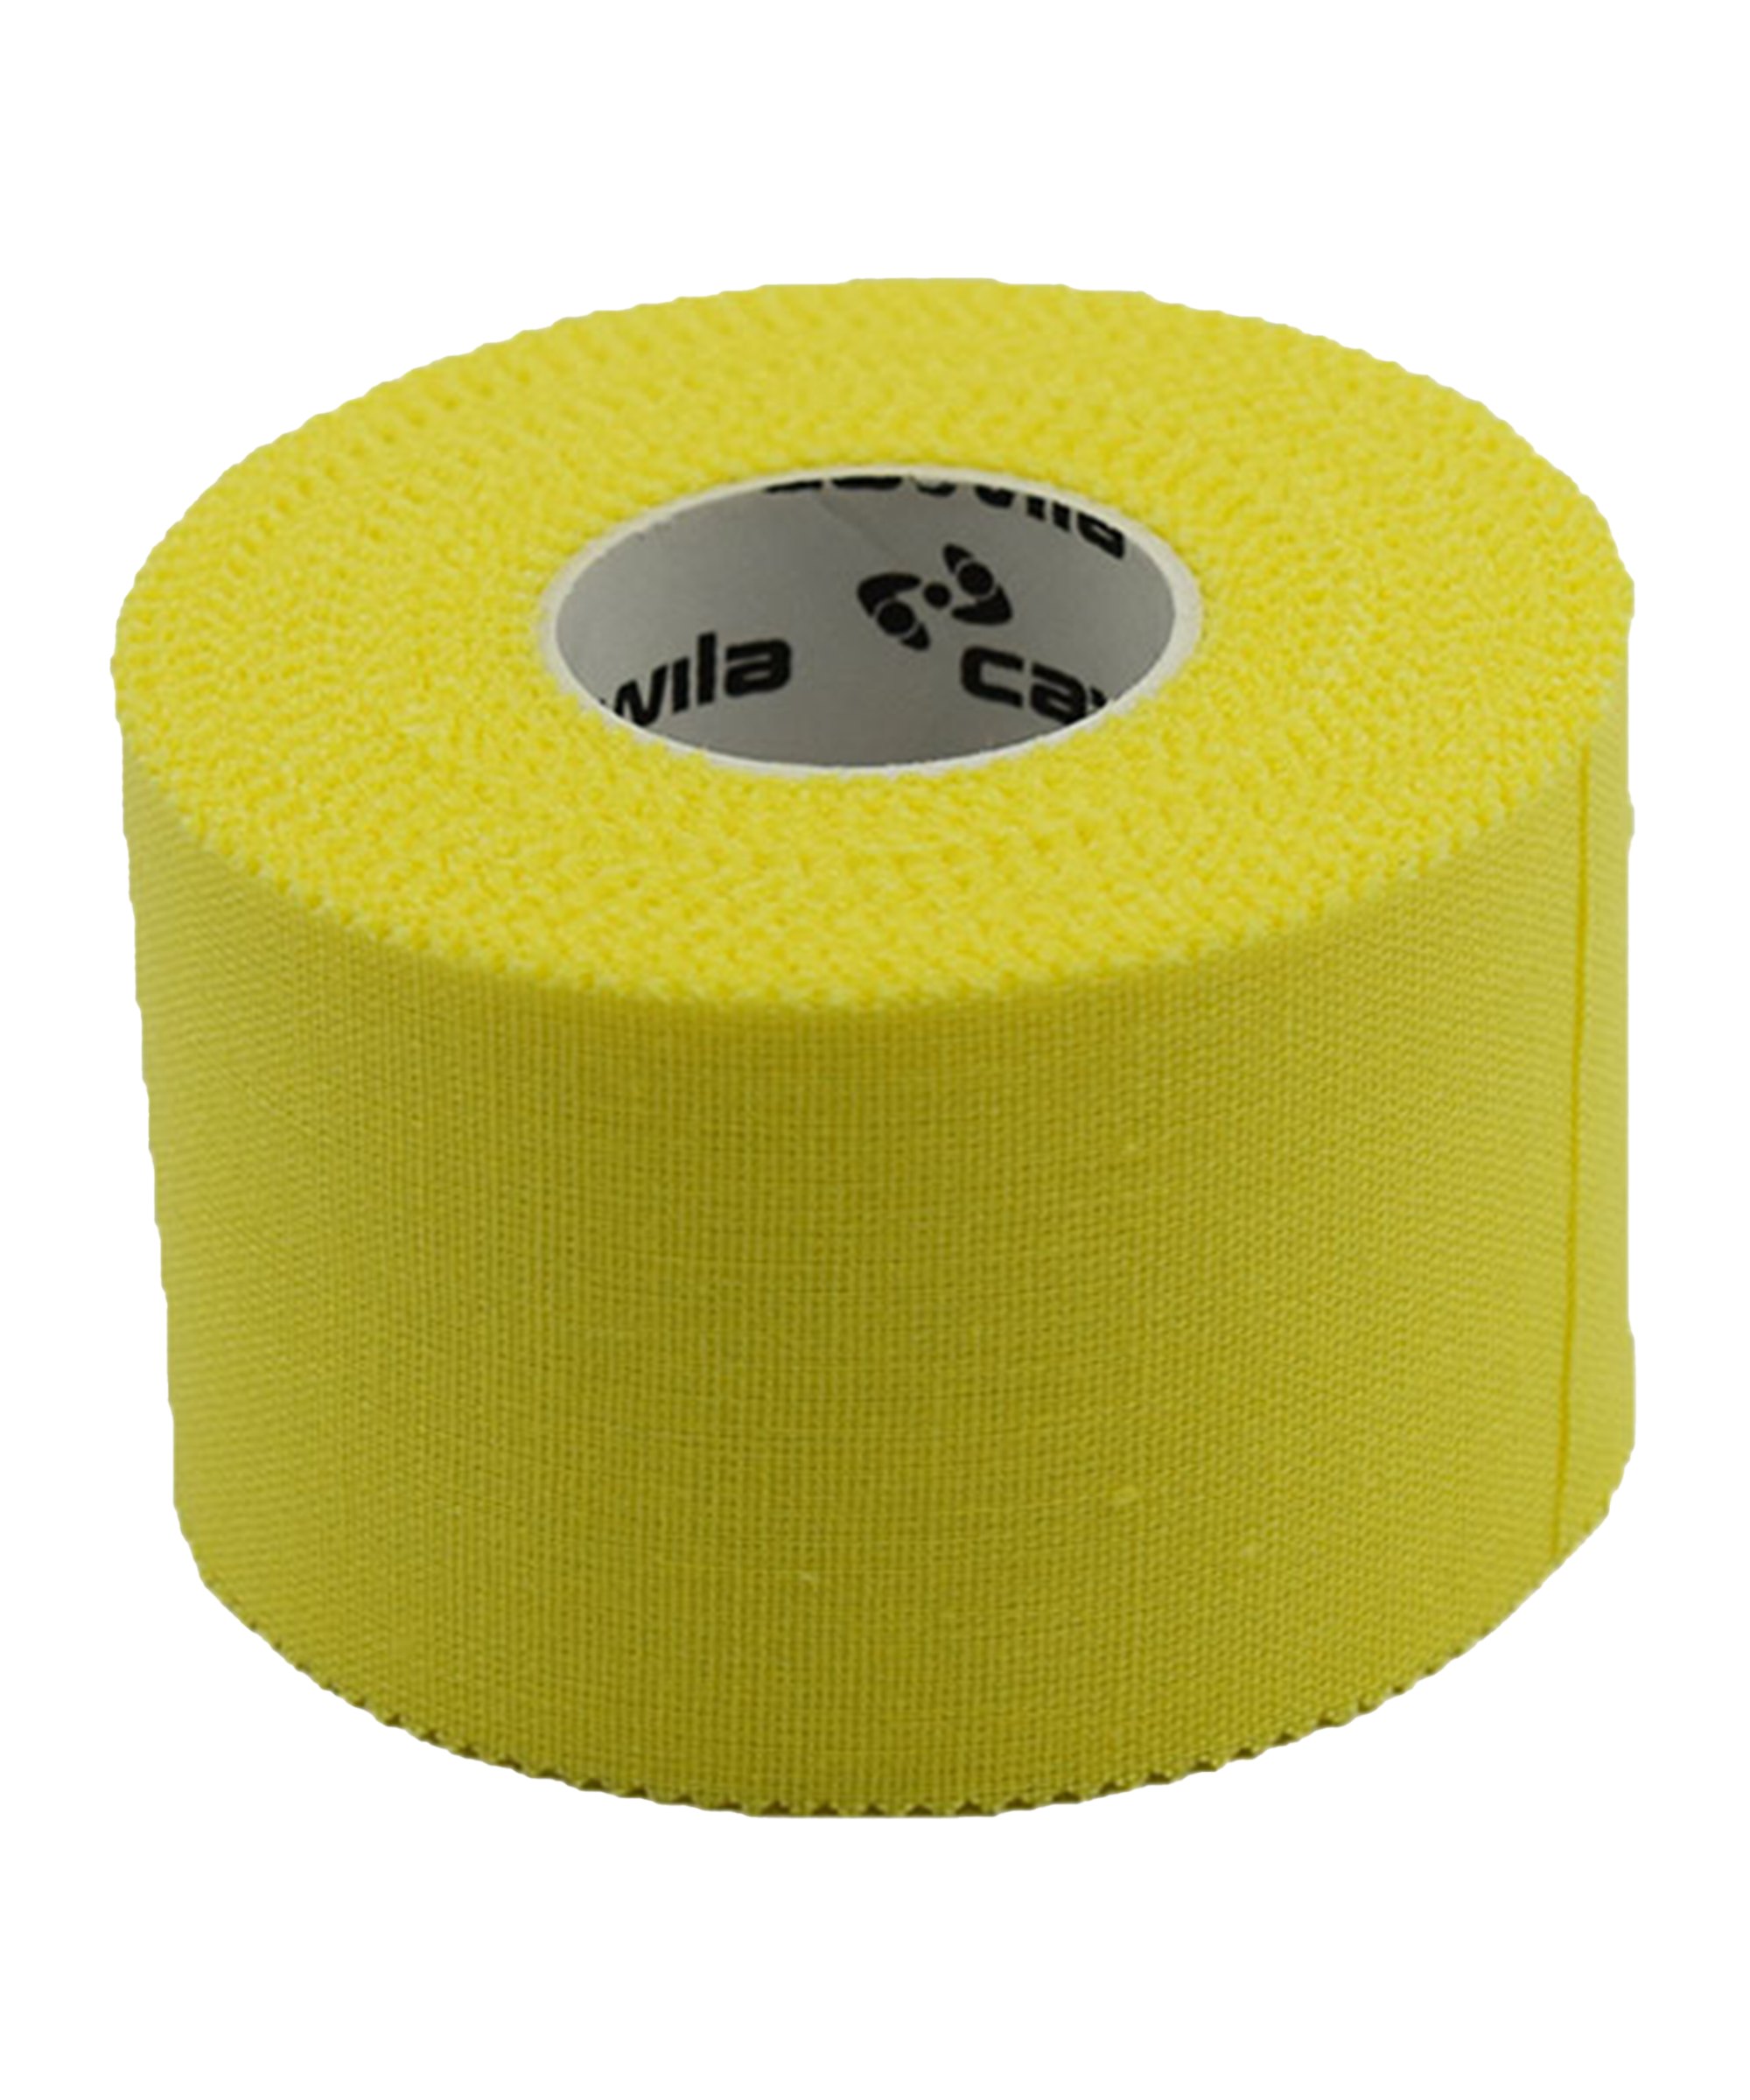 Cawila Tape 10 Meter 3,8 cm breit 2er Set Gelb - gelb